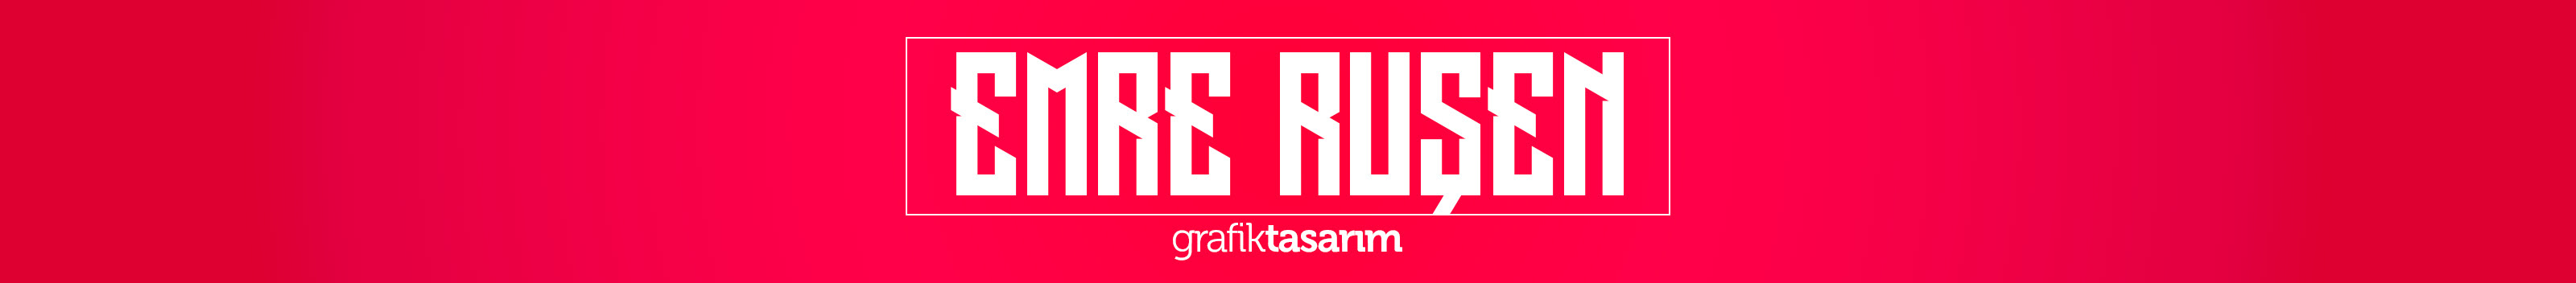 Emre Rusen's profile banner